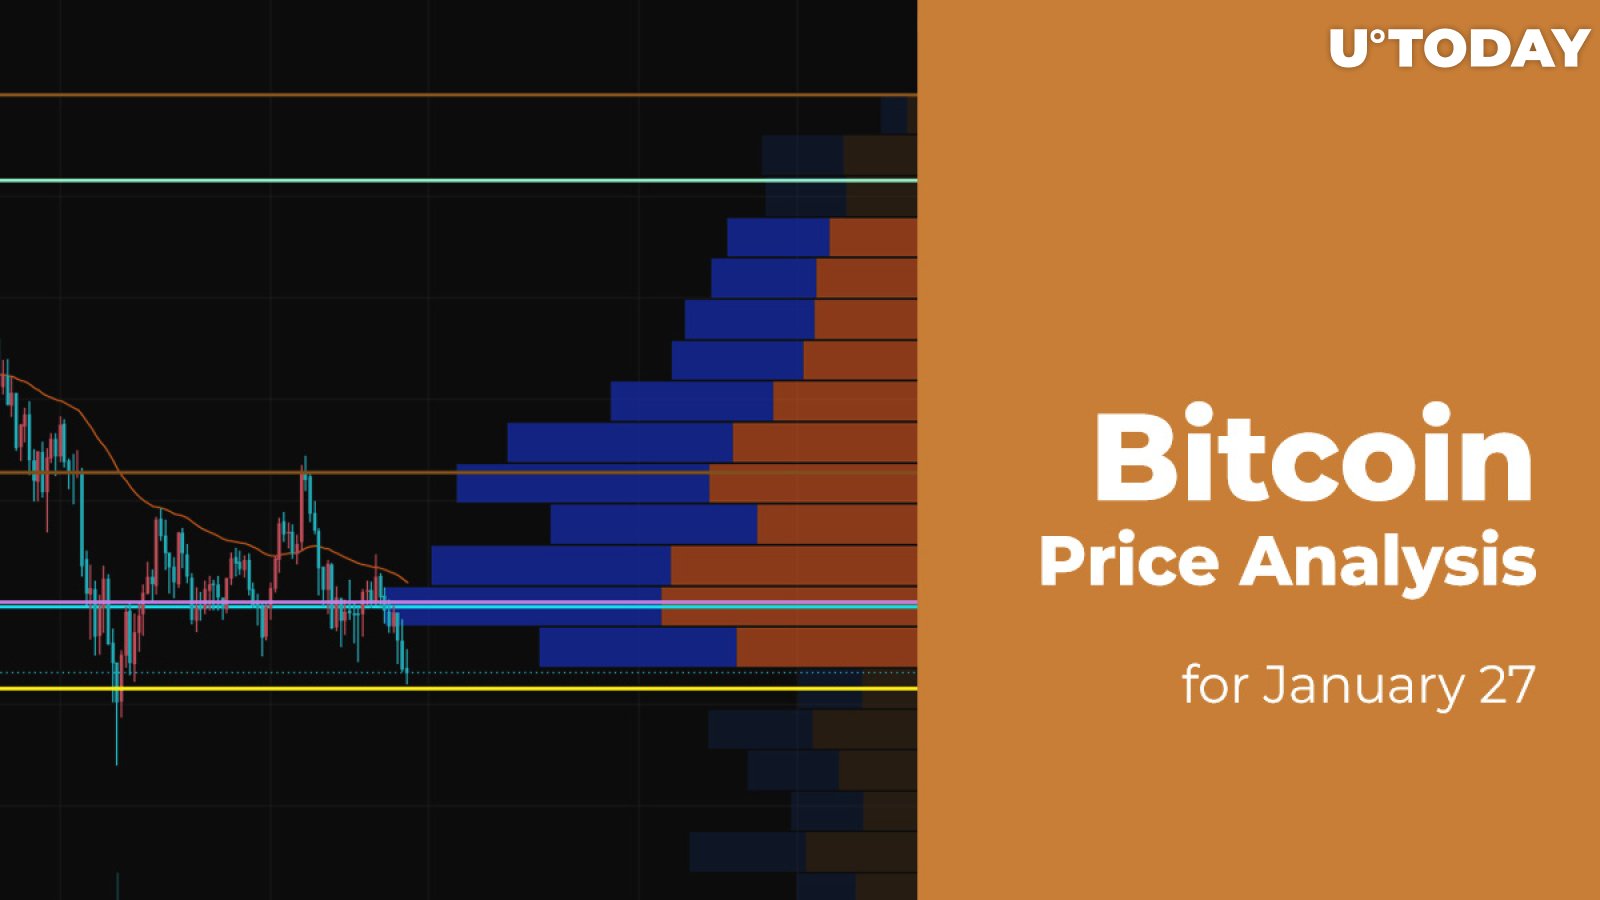 Bitcoin (BTC) Price Analysis for January 27